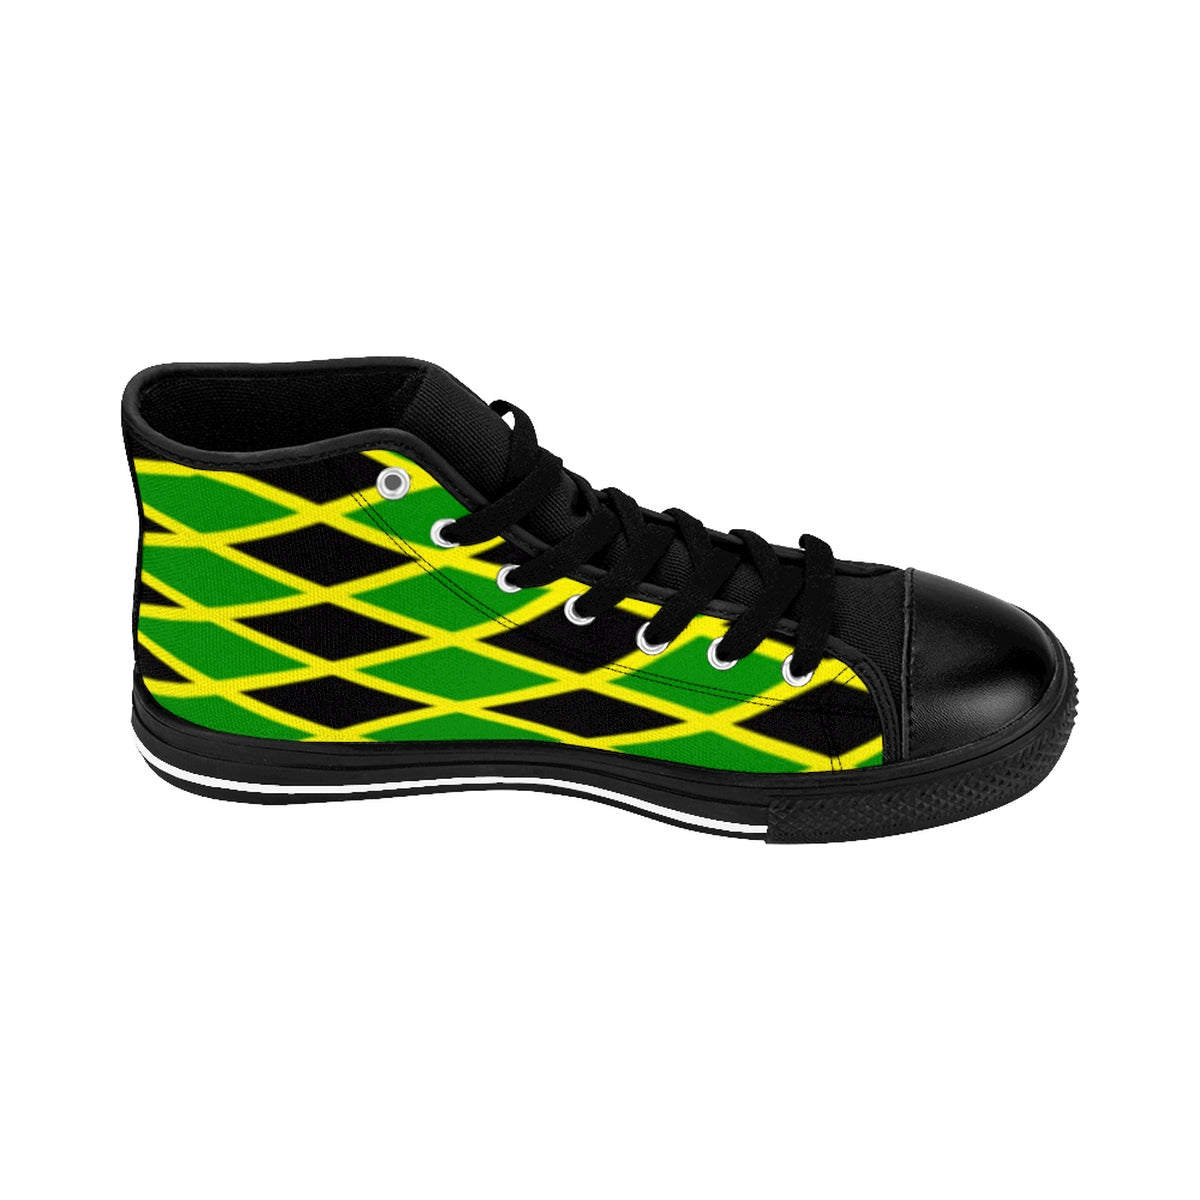 Jamaican Gambian High-top Sneakers